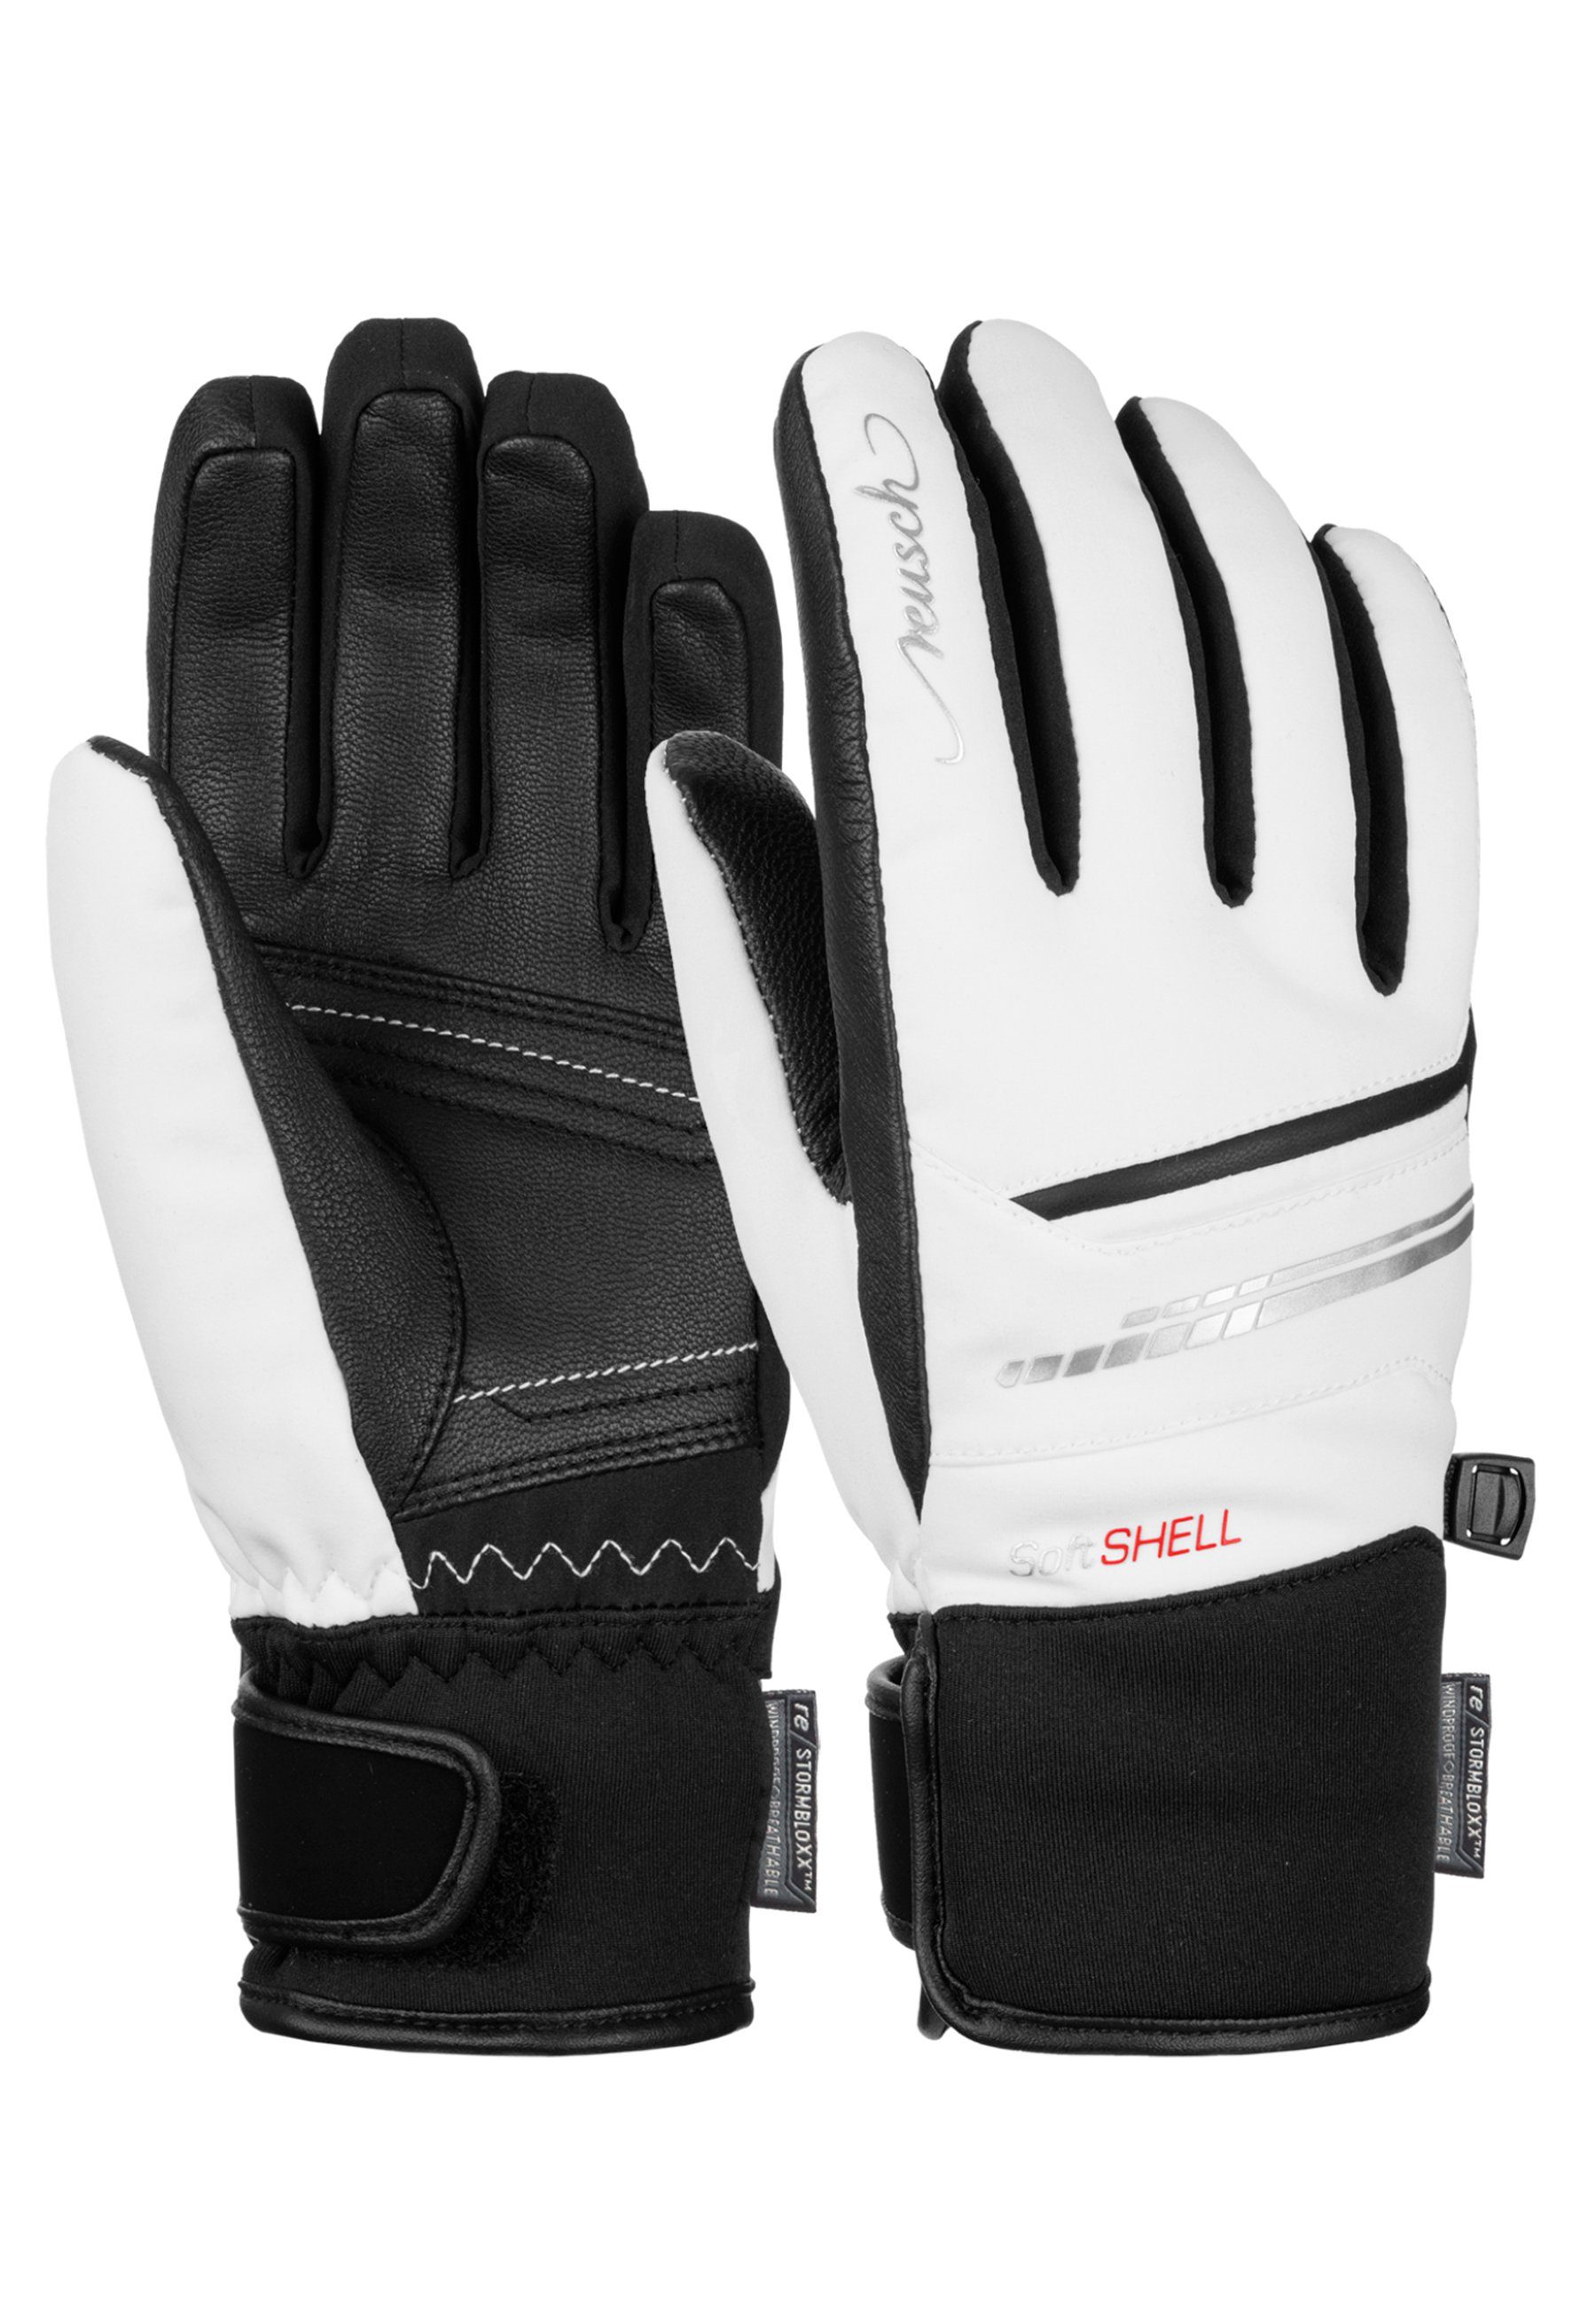 Reusch Skihandschuhe Tomke STORMBLOXX in sportlichem Design schwarz-weiß | Handschuhe